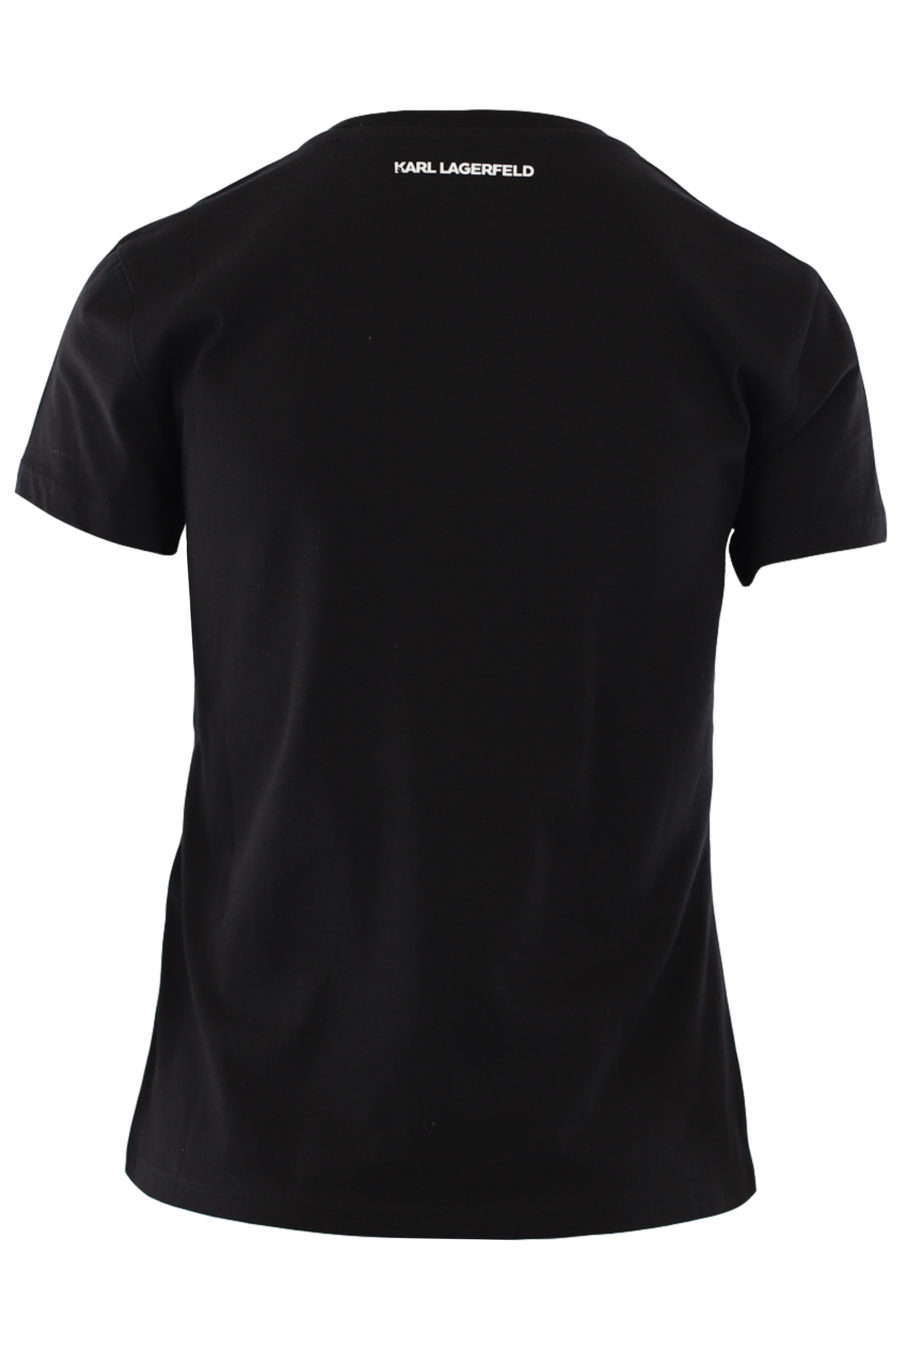 Camiseta negra con logo multicolor de goma - IMG 0825